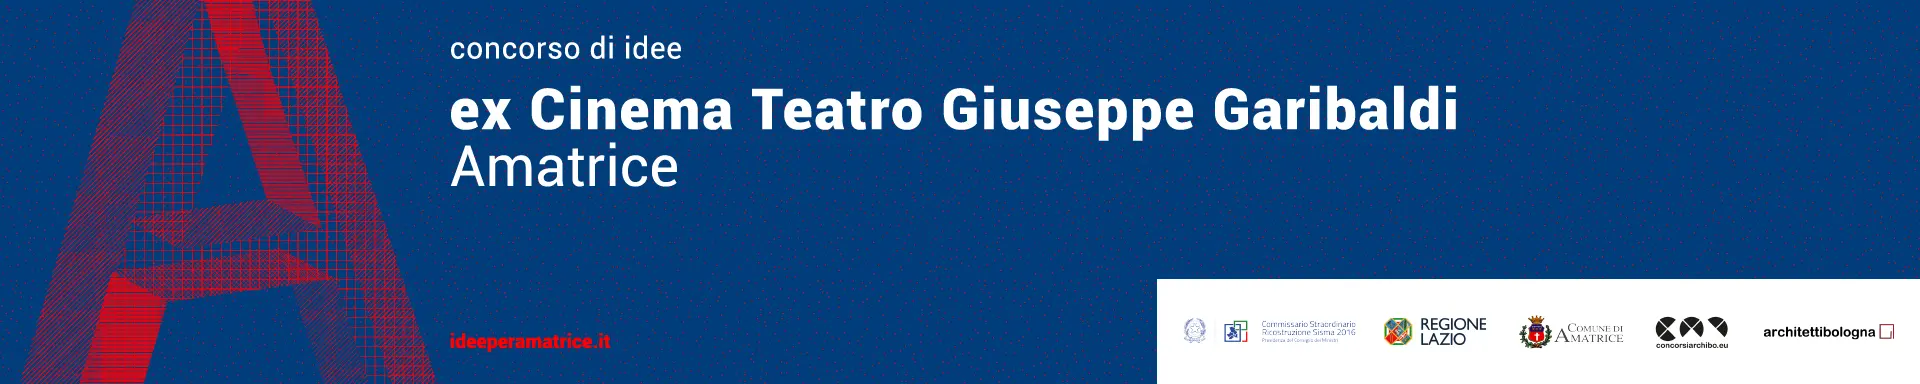 Ex Cinema Teatro Giuseppe Garibaldi